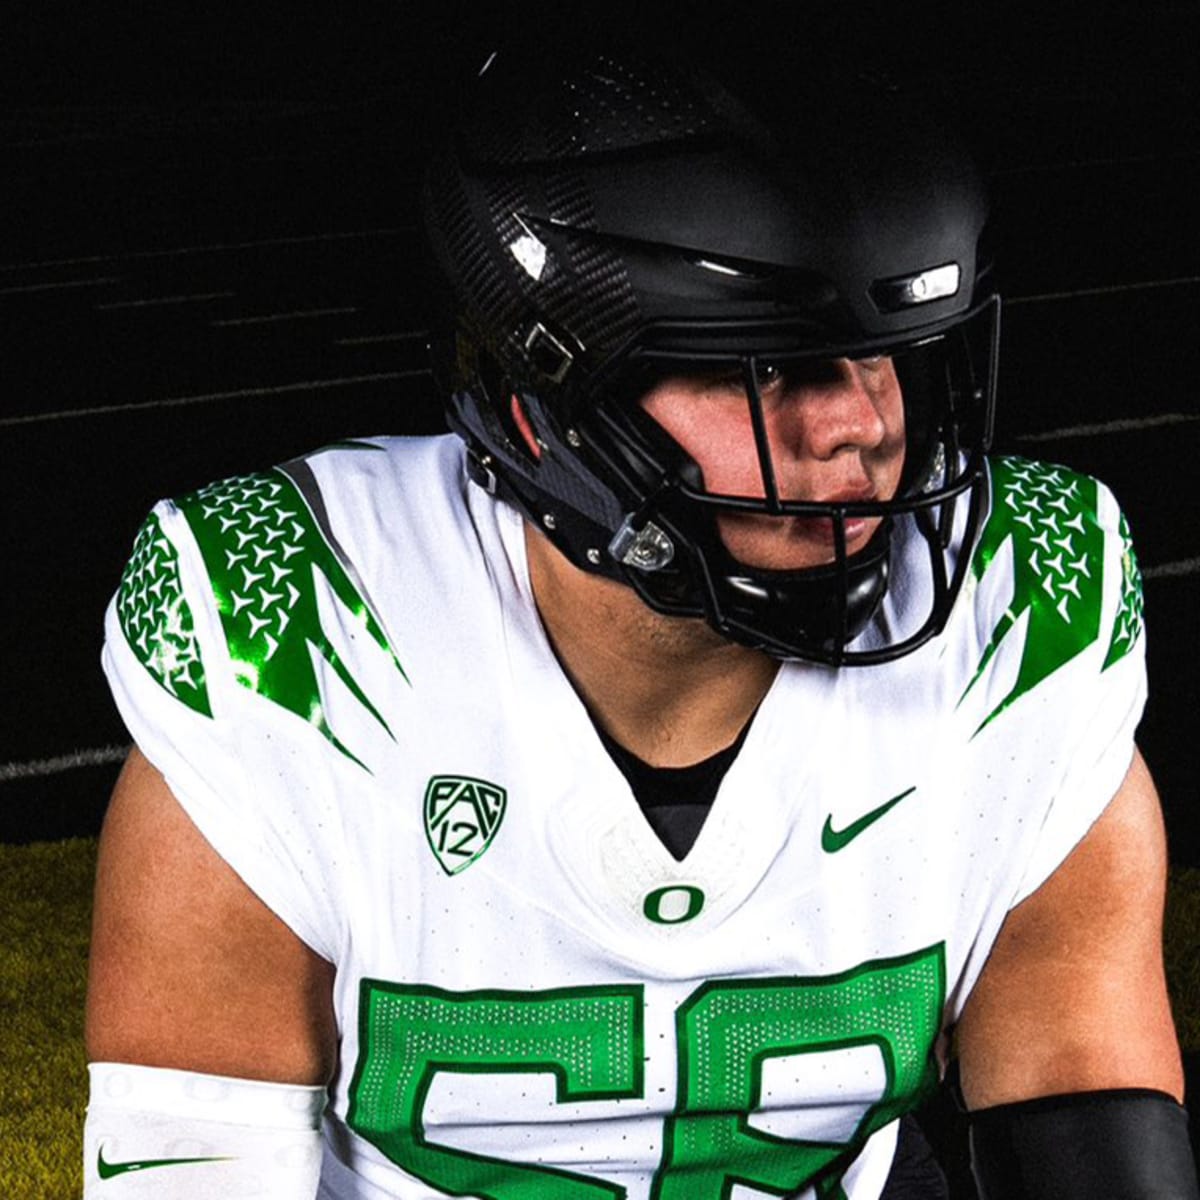 Oregon, Utah among Week 12's top college football uniforms - ESPN